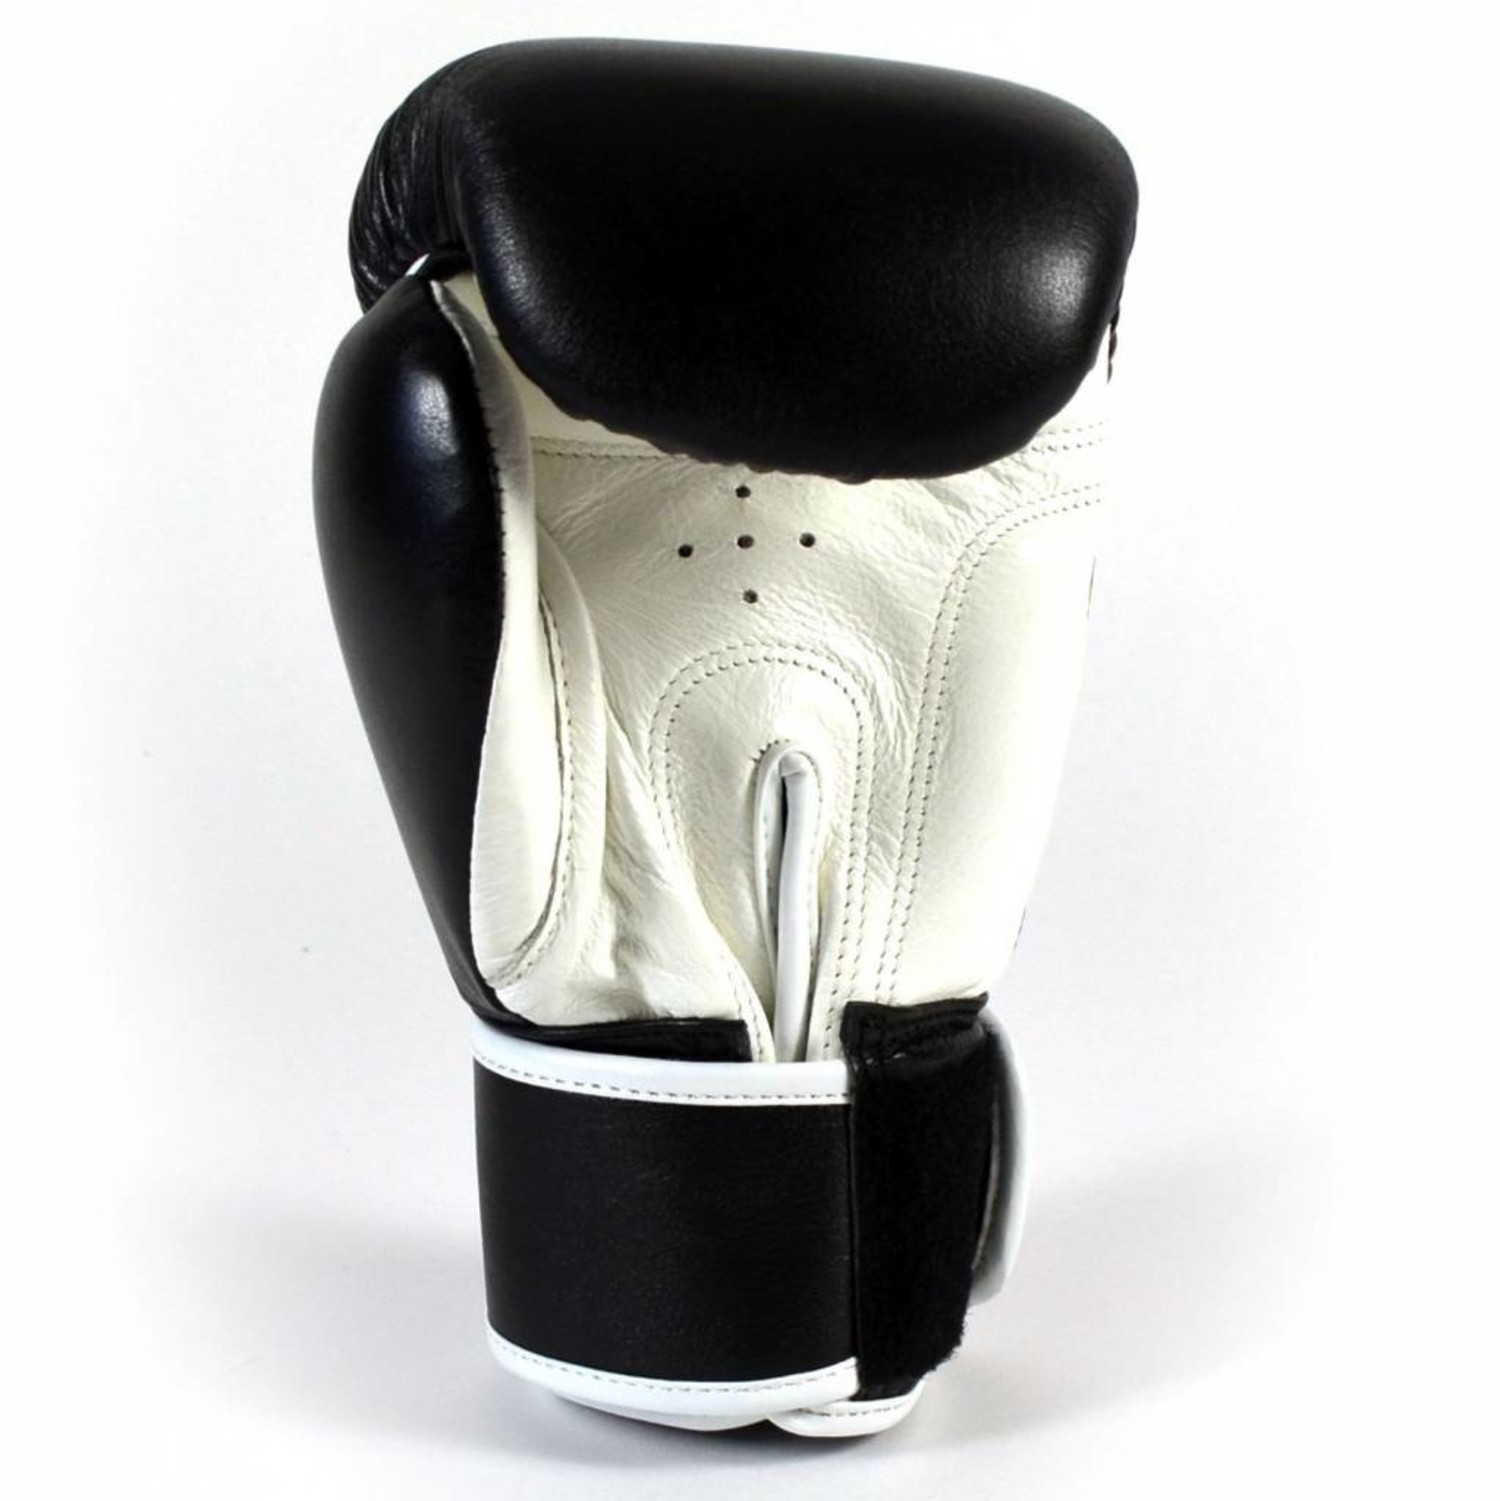 Buddha Epic Boxing Gloves Black / Gold Leather > Free Shipping